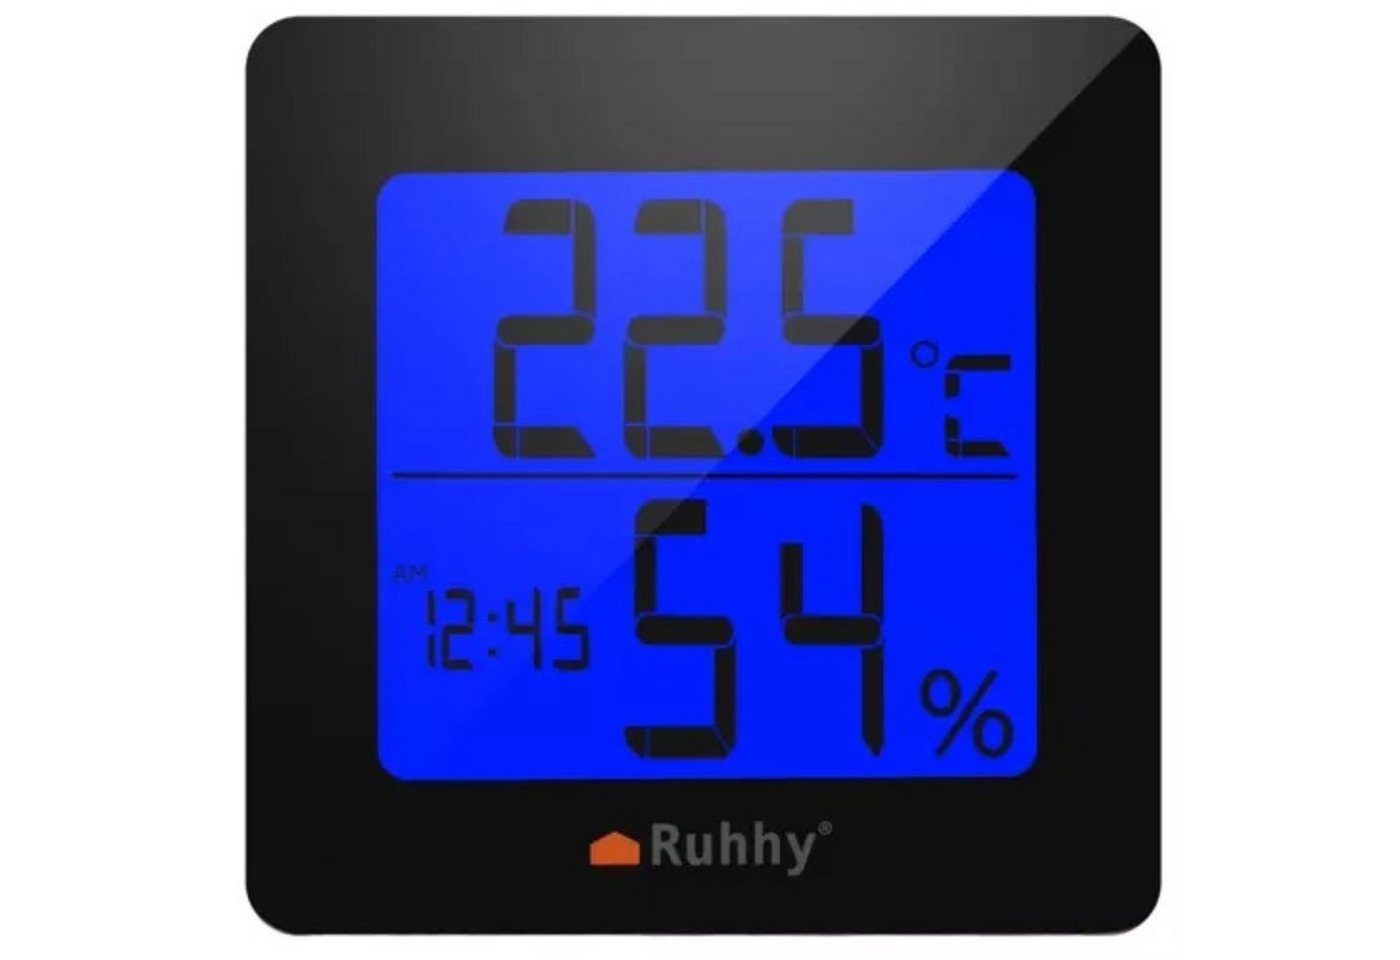 Ruhhy Multifunktionale Wetterstation: Thermometer, Hygrometer, Uhr, Wecker Wetterstation (Multifunktionale Wetterstation für präzise Messungen) von Ruhhy